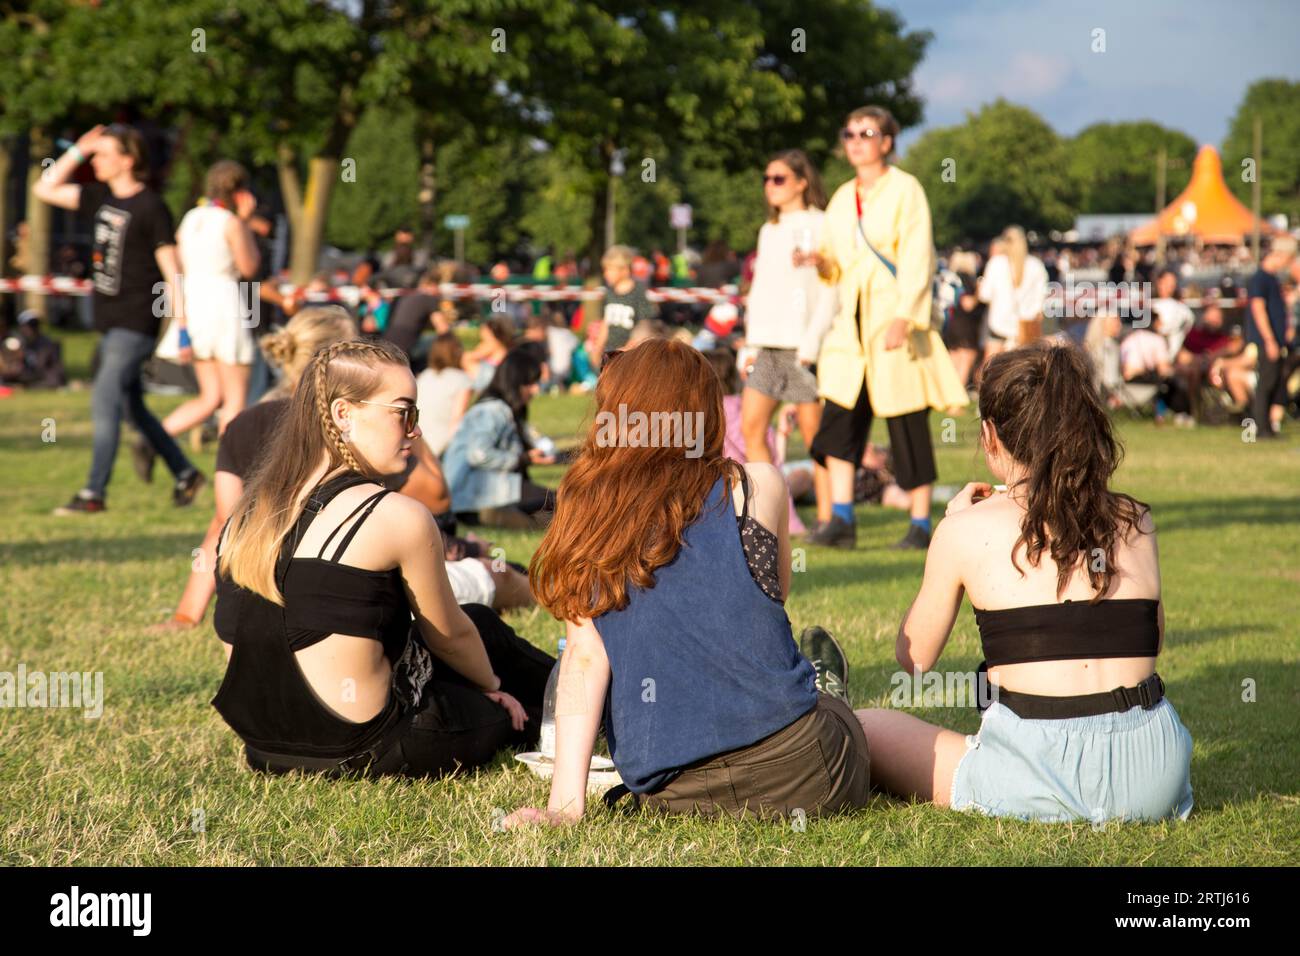 Roskilde, Danemark, 29 juin 2016 : des gens assis sur l'herbe et profitant du soleil et des concerts au Festival de Roskilde Banque D'Images